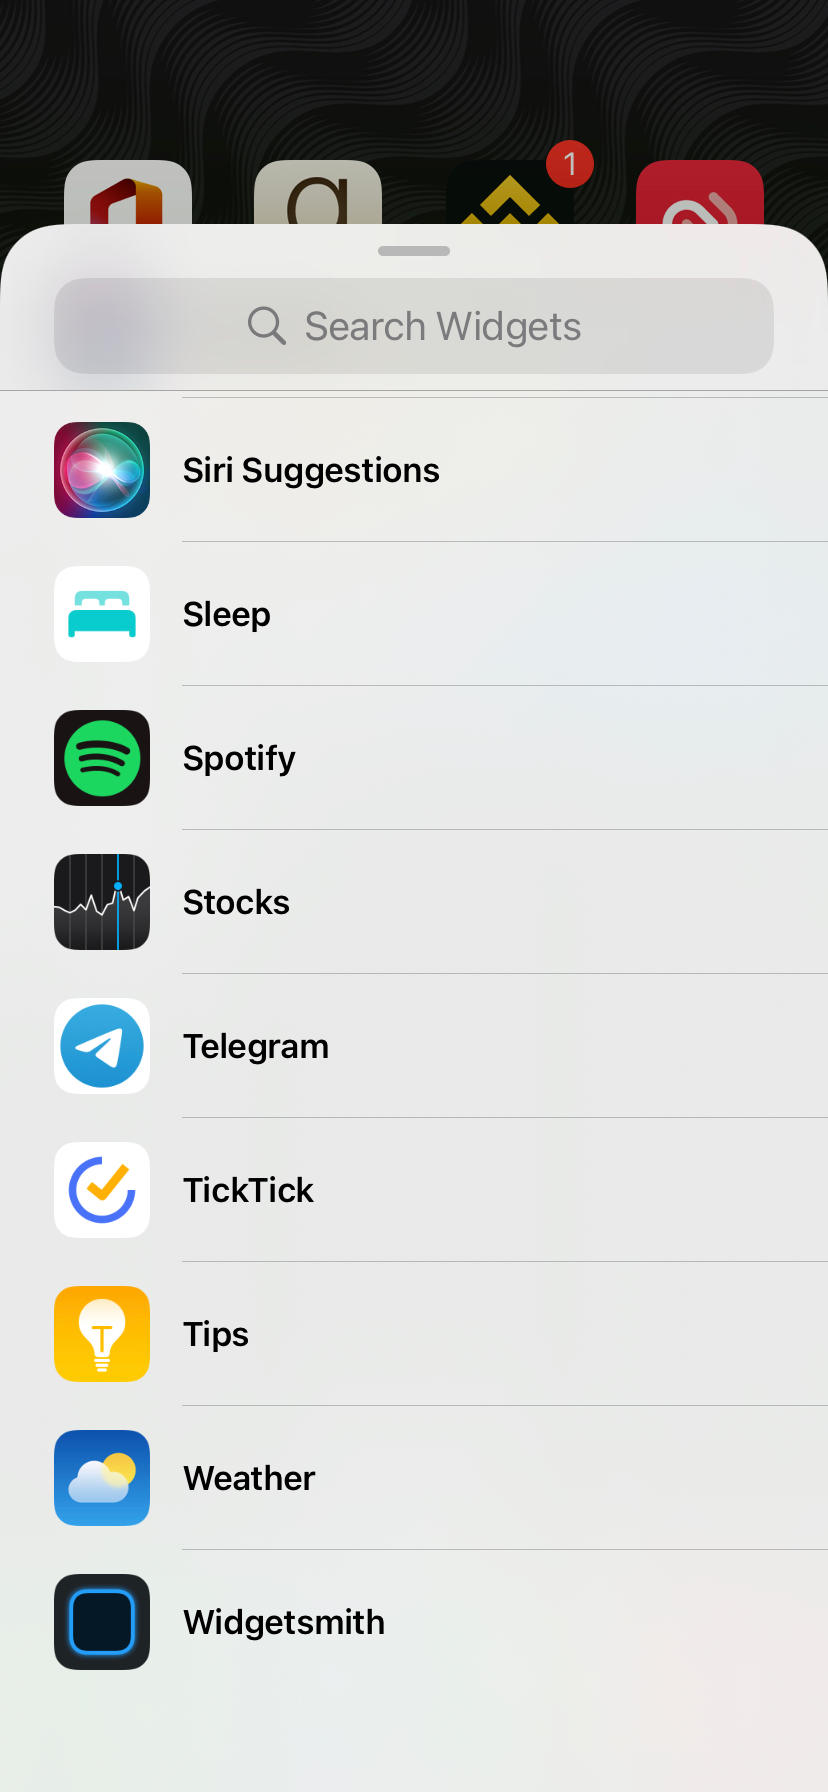 Adding widgets to iOS Home screen